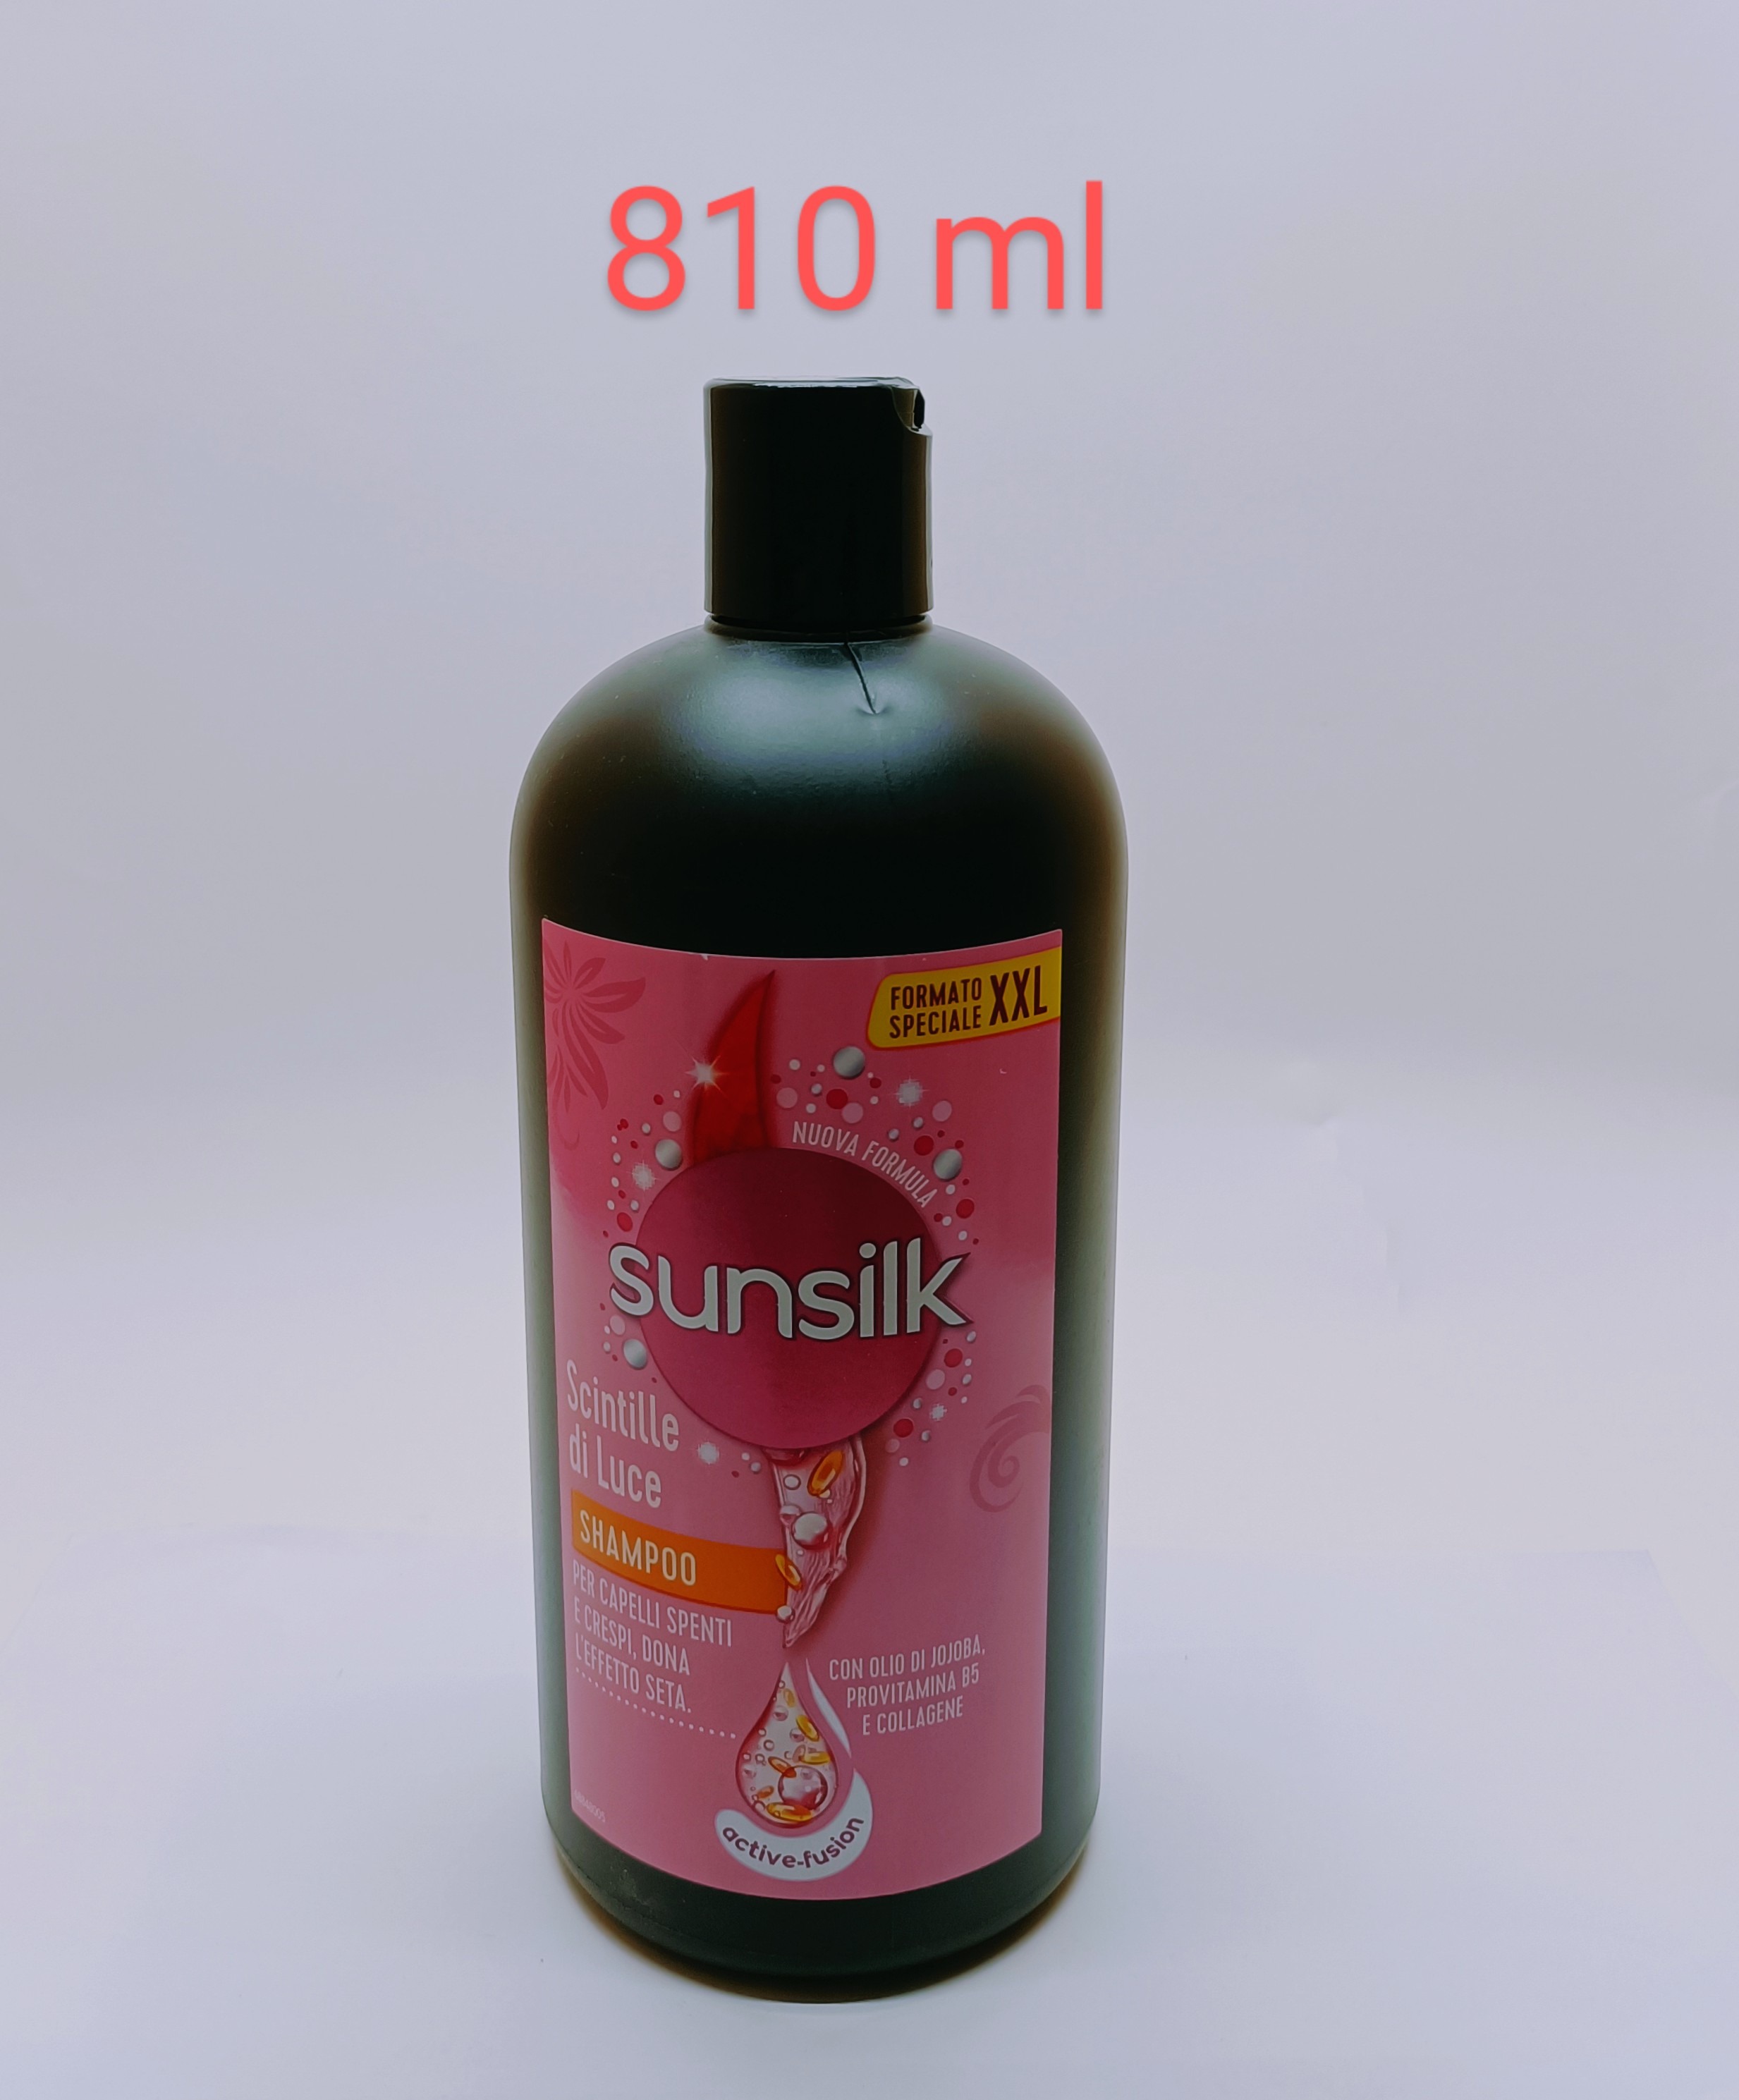 Sunsilk Scintille di Luce + Effetto Seta, Shampoo 810 ml (Cargo)